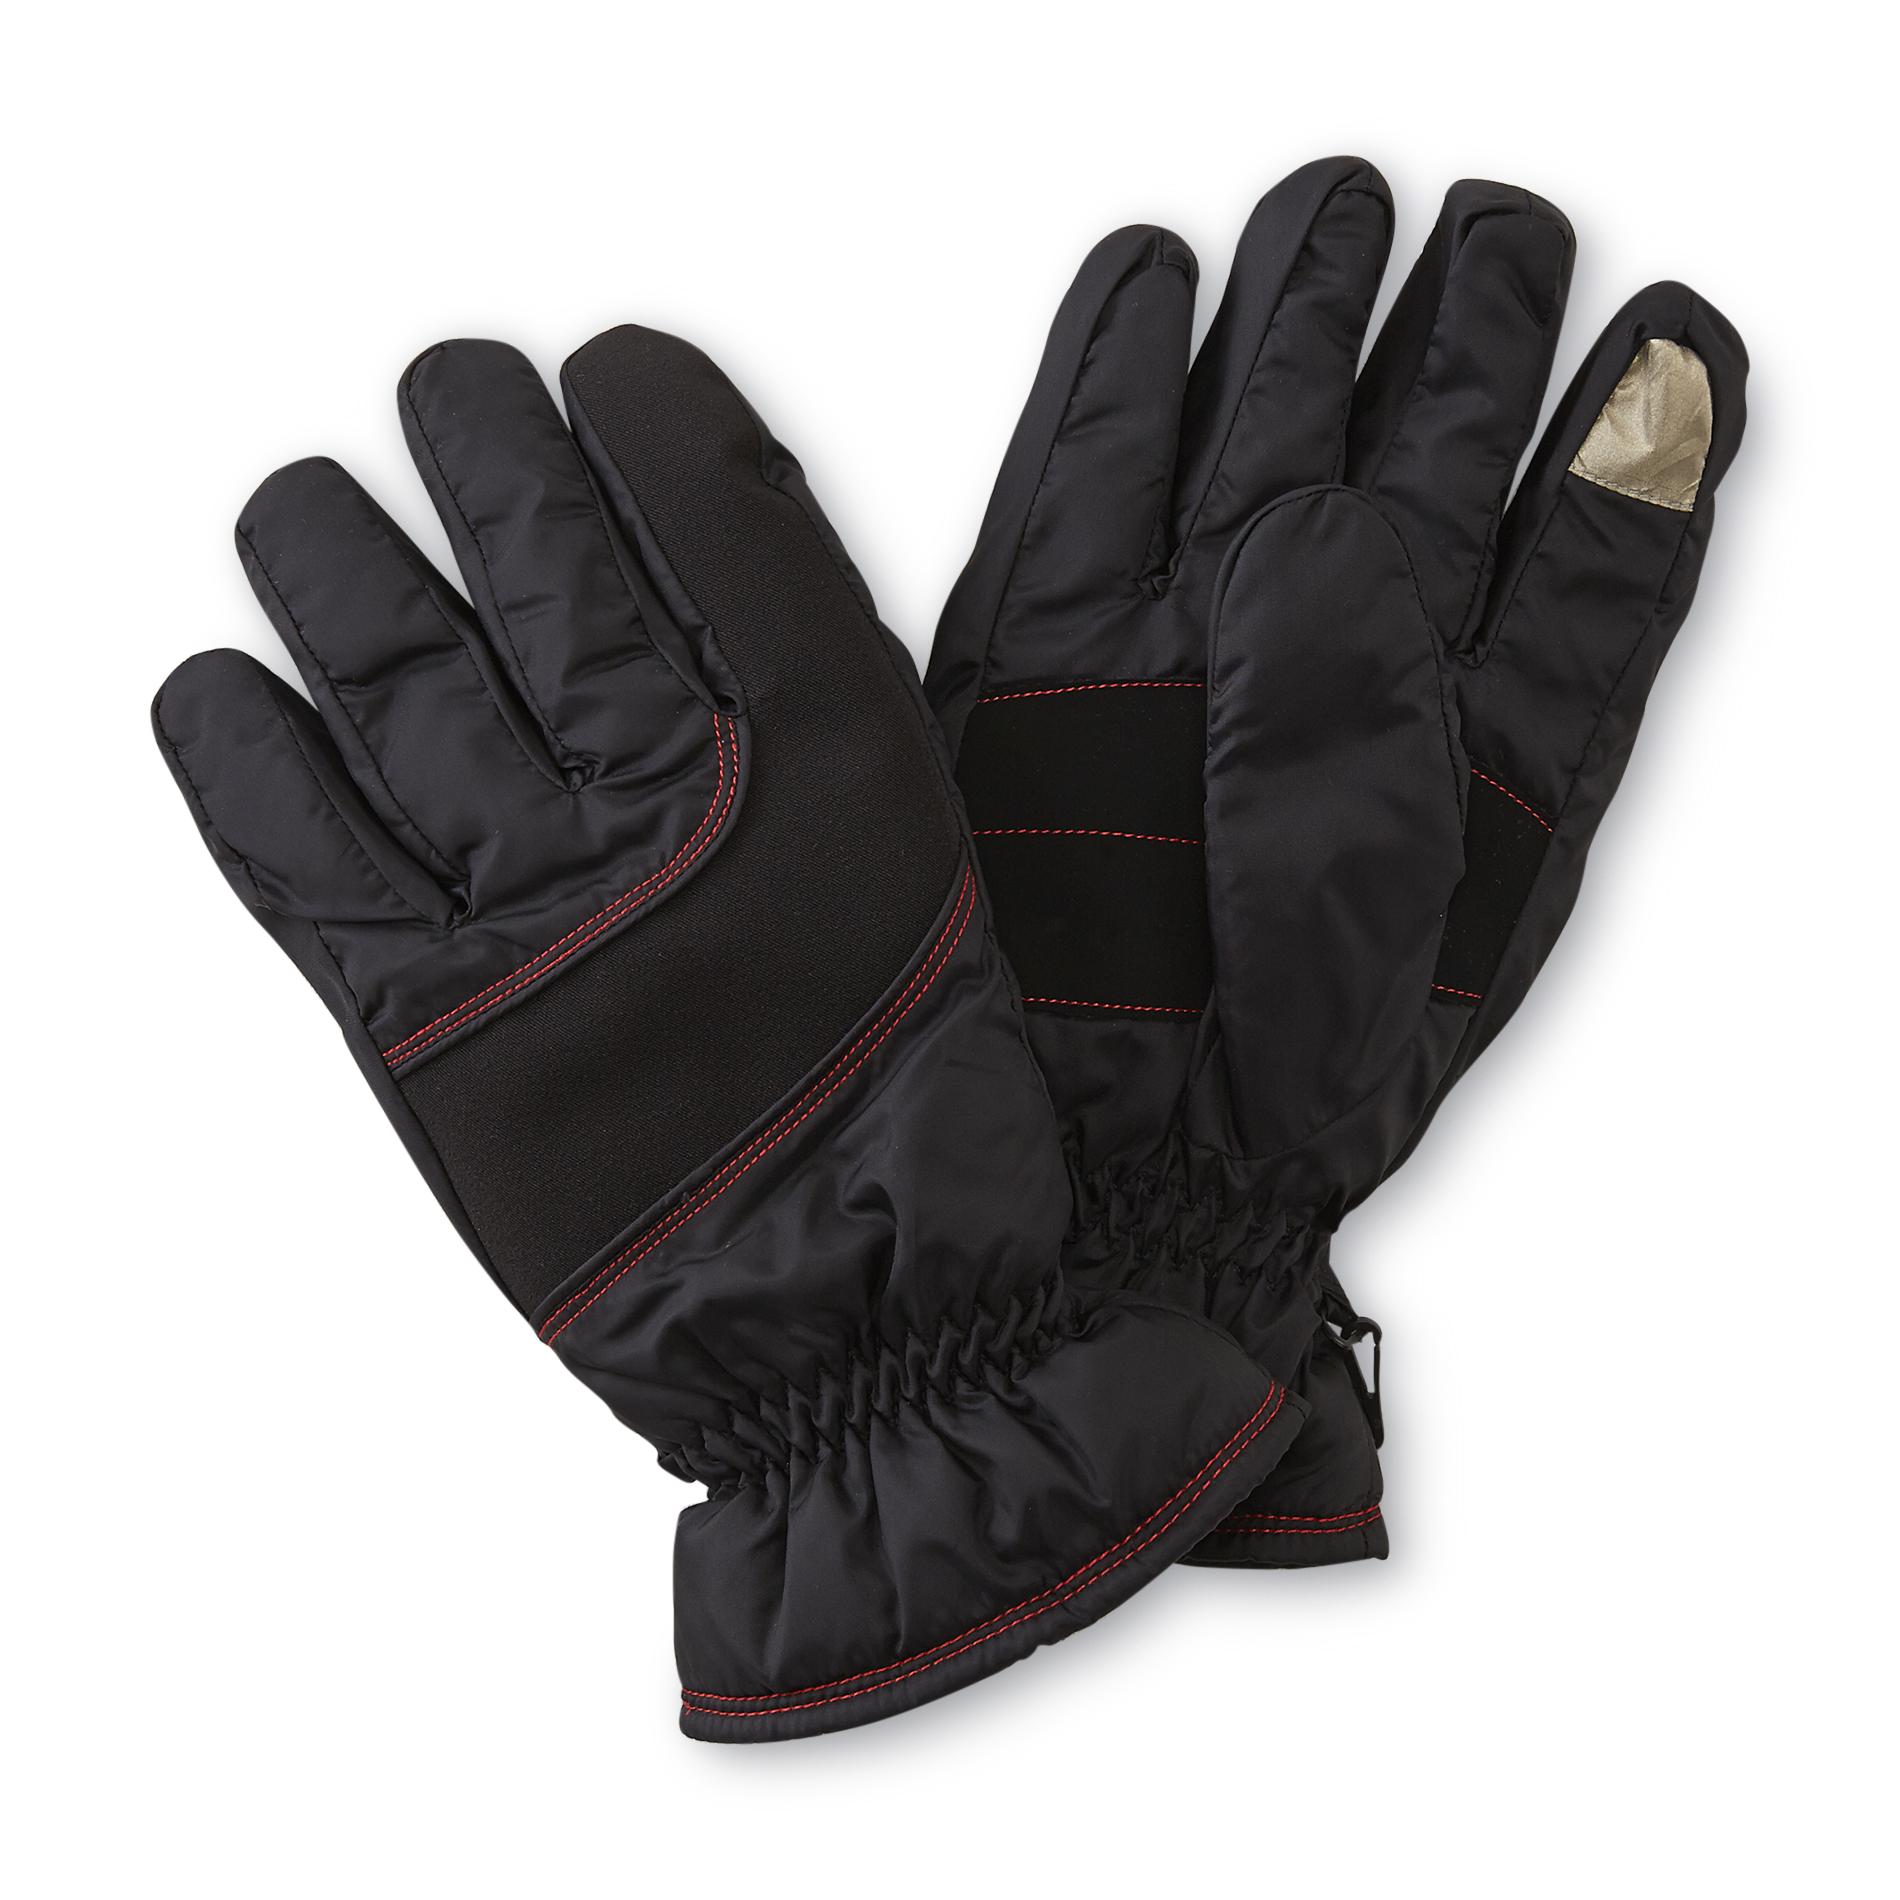 NordicTrack Men's Texting Ski Gloves